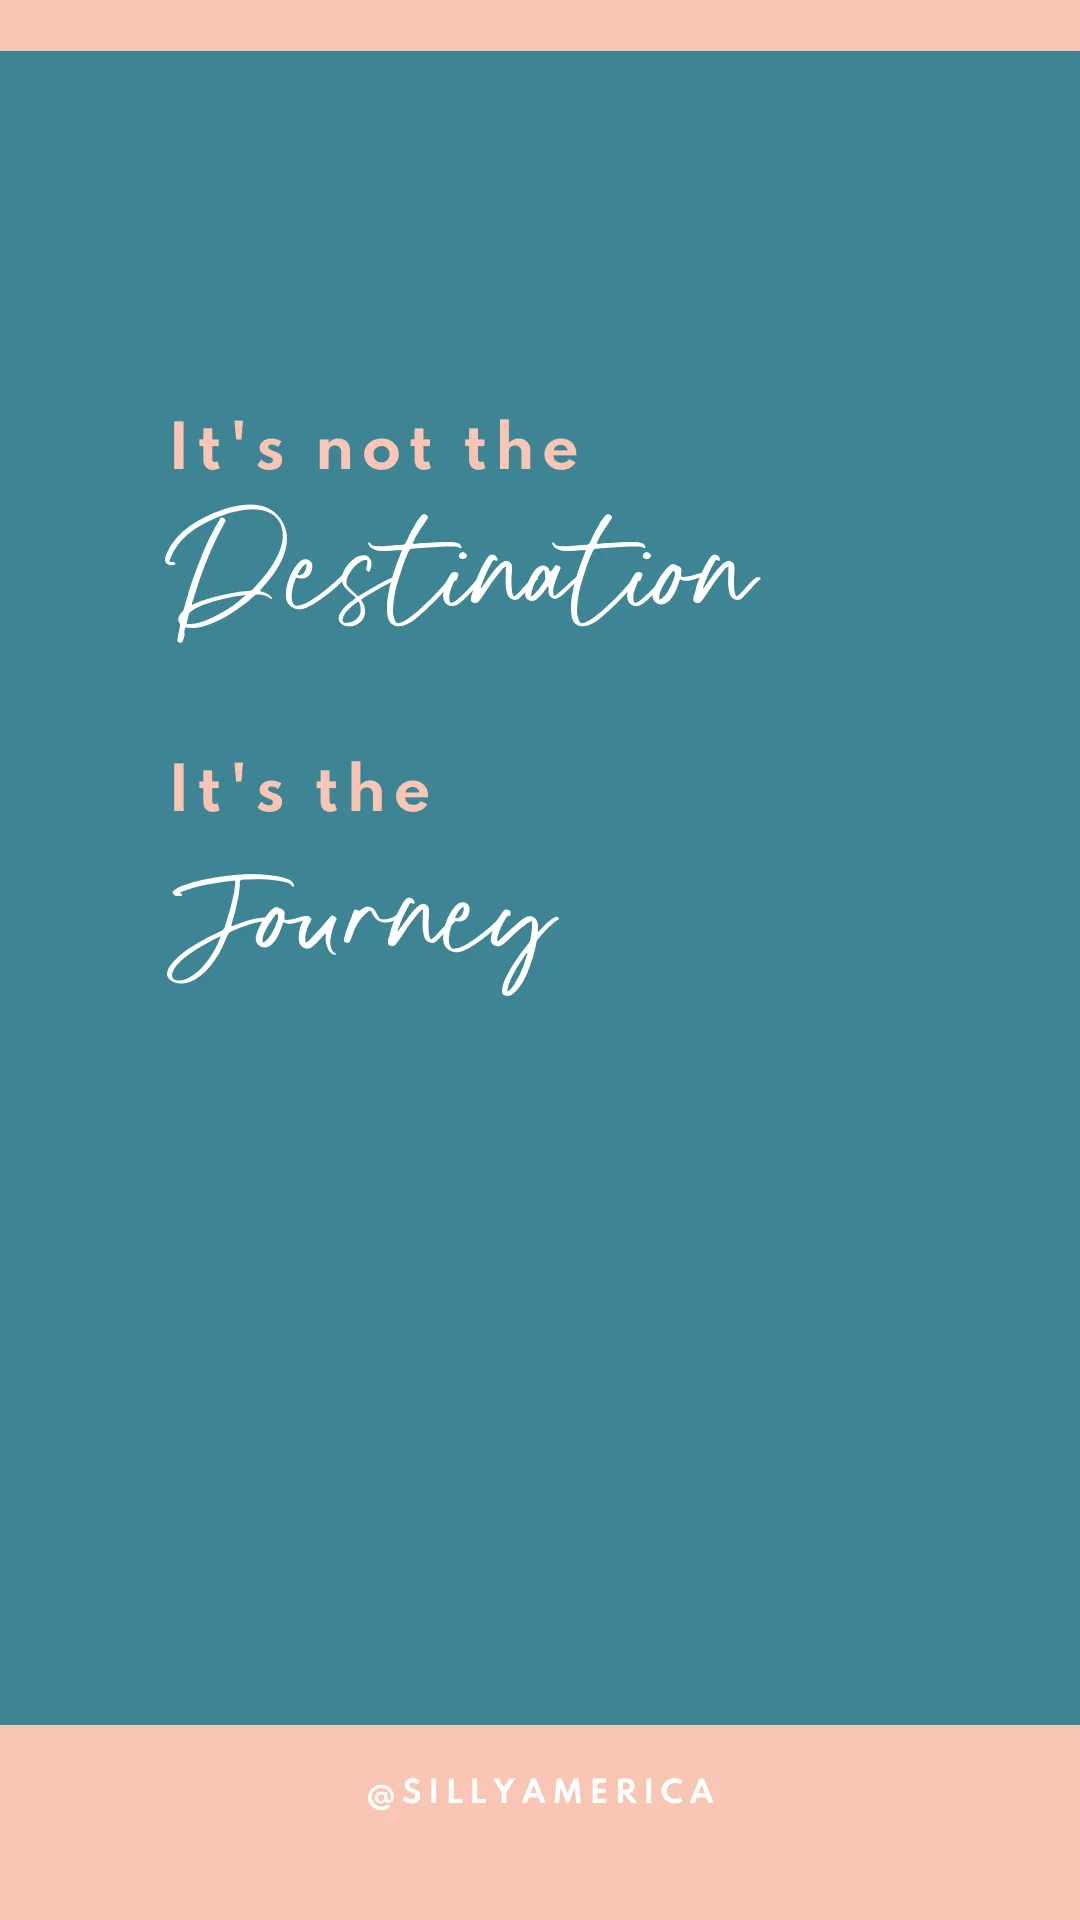 It's not the destination. It's the journey. - Road Trip Captions for Instagram